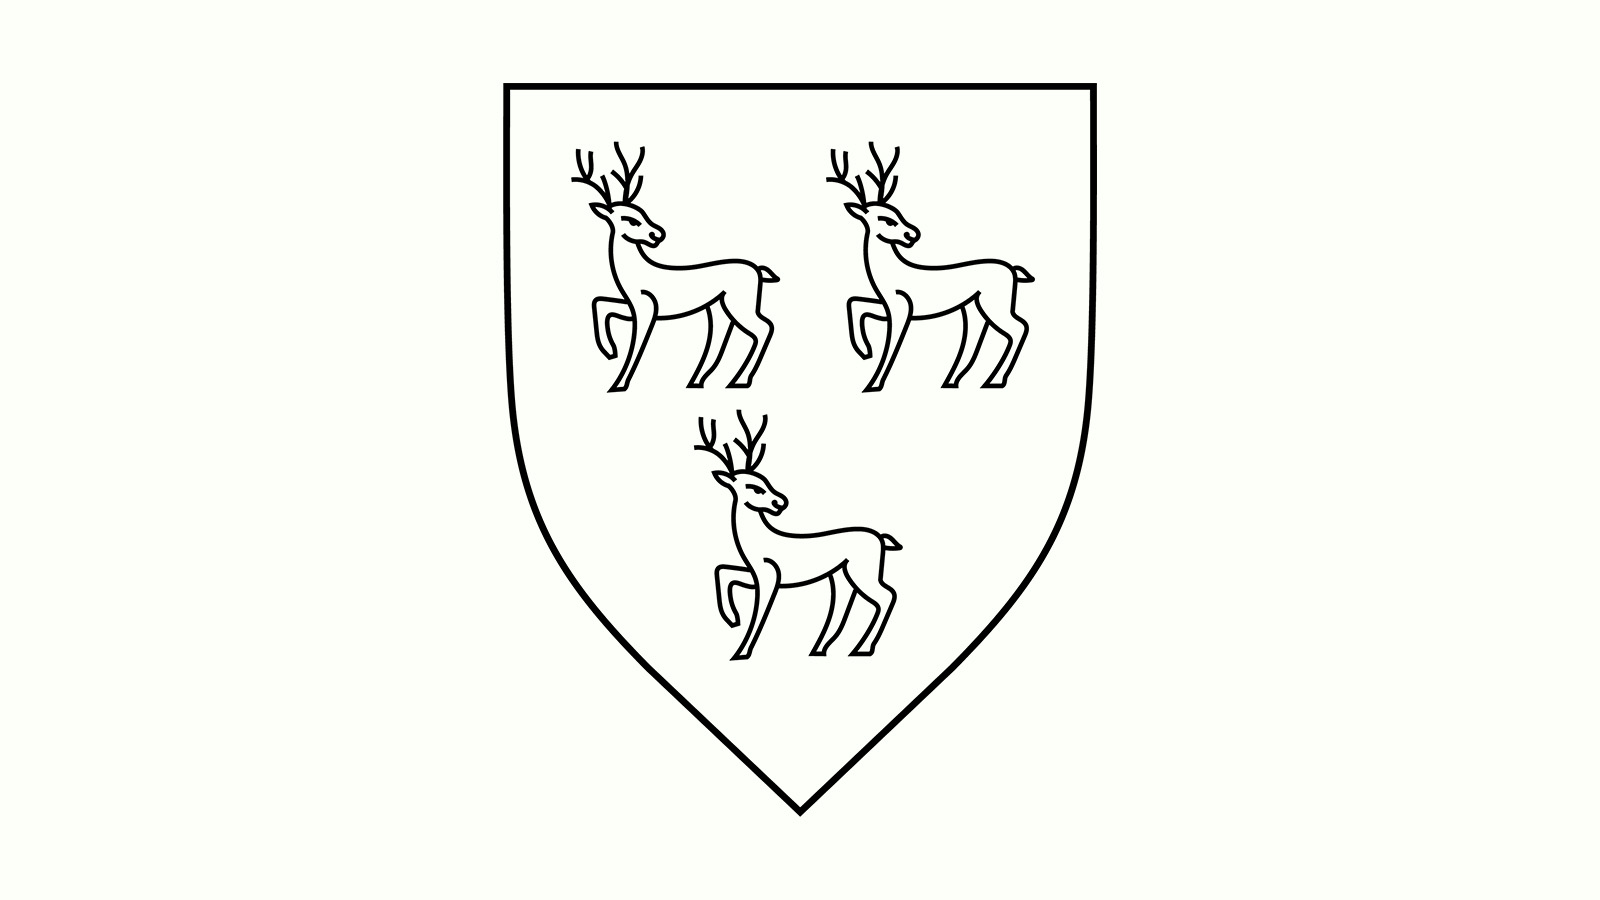 a black line logo showing three roebucks in a shield